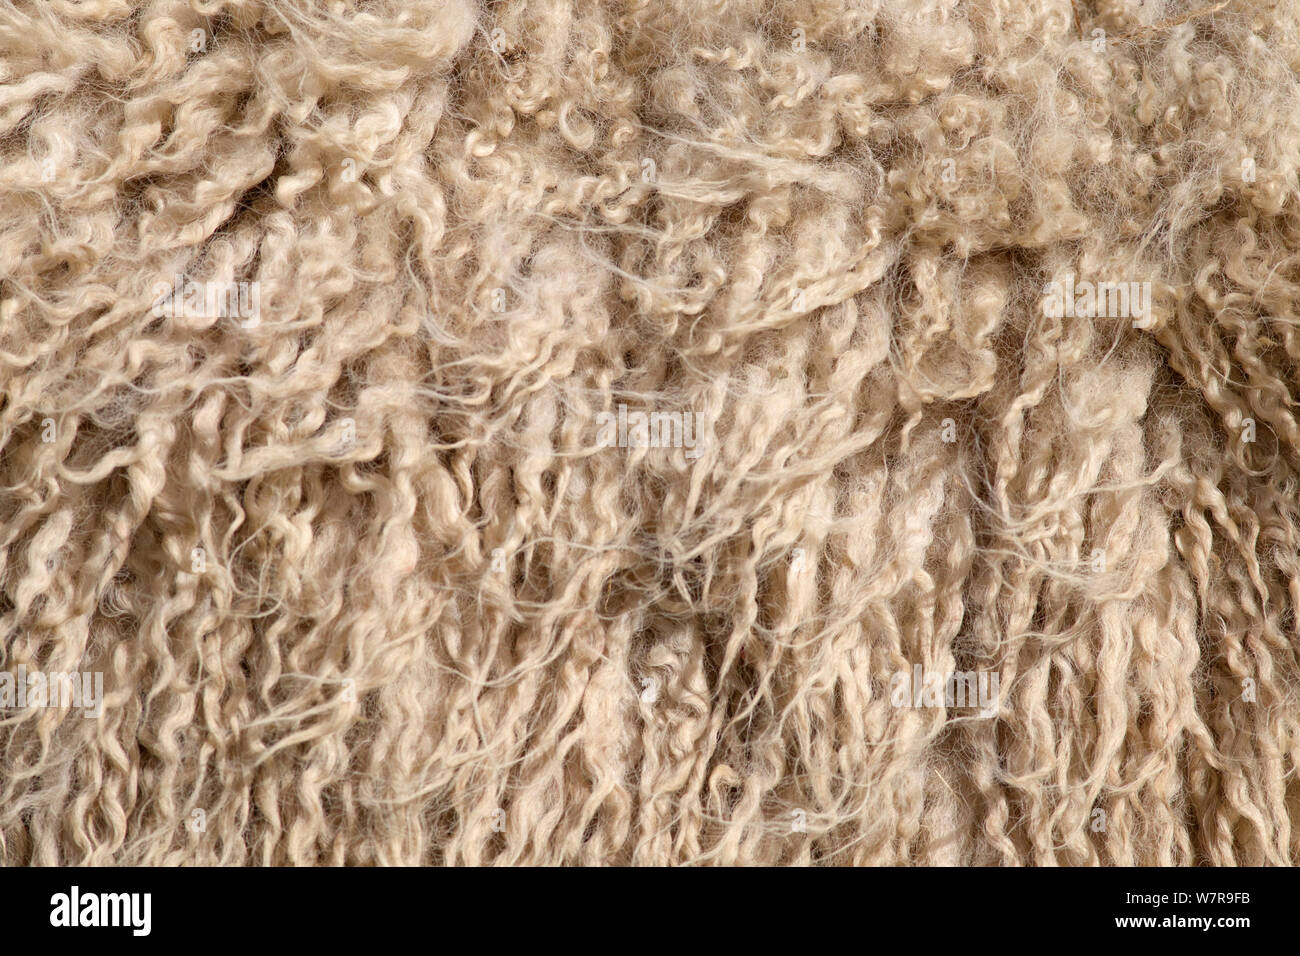 Sheep's fleece close up Stock Photo